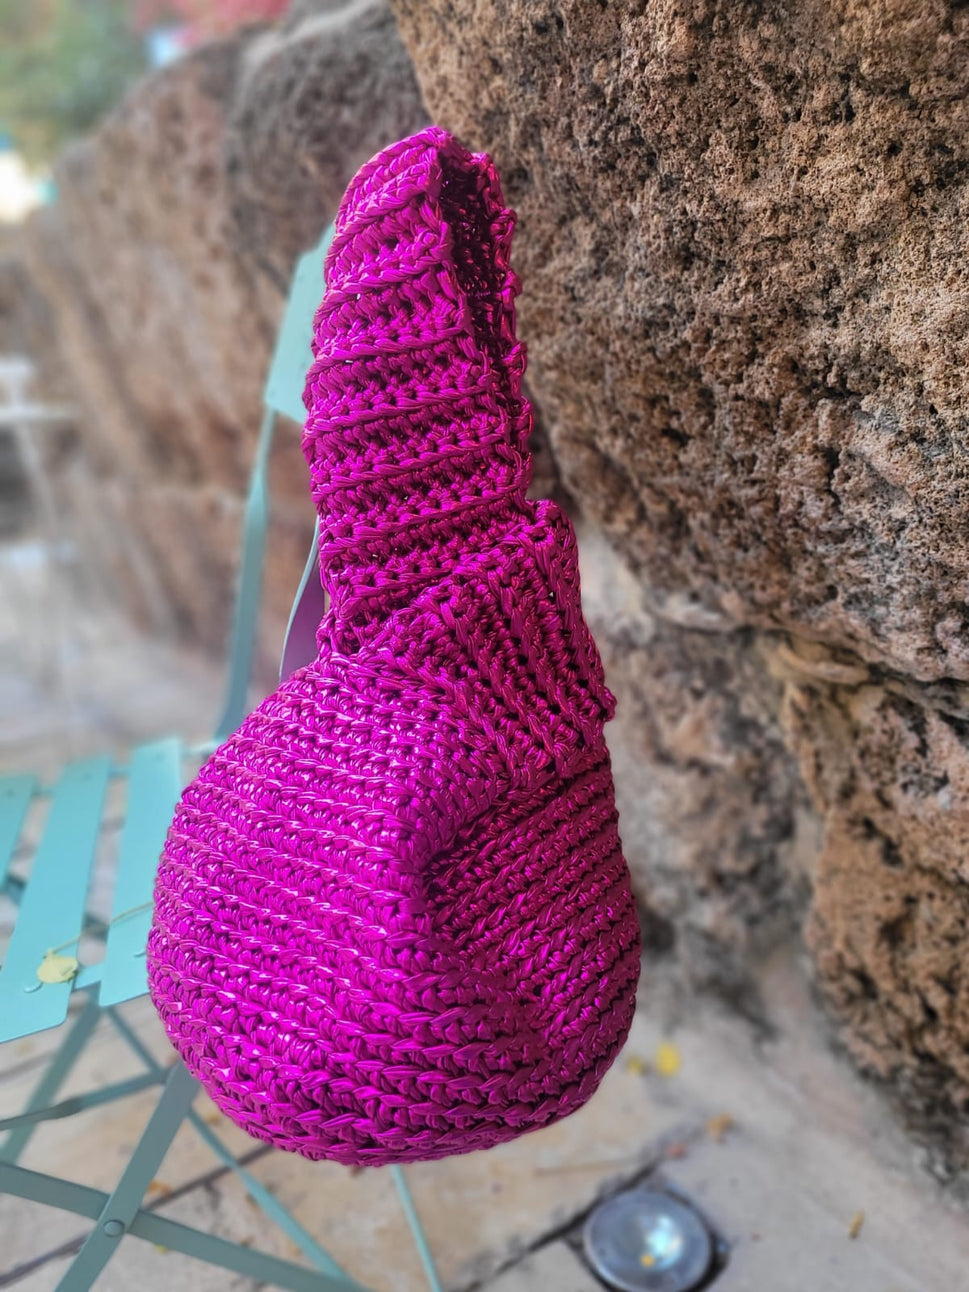 The Hanging Metallic Crochet Bag